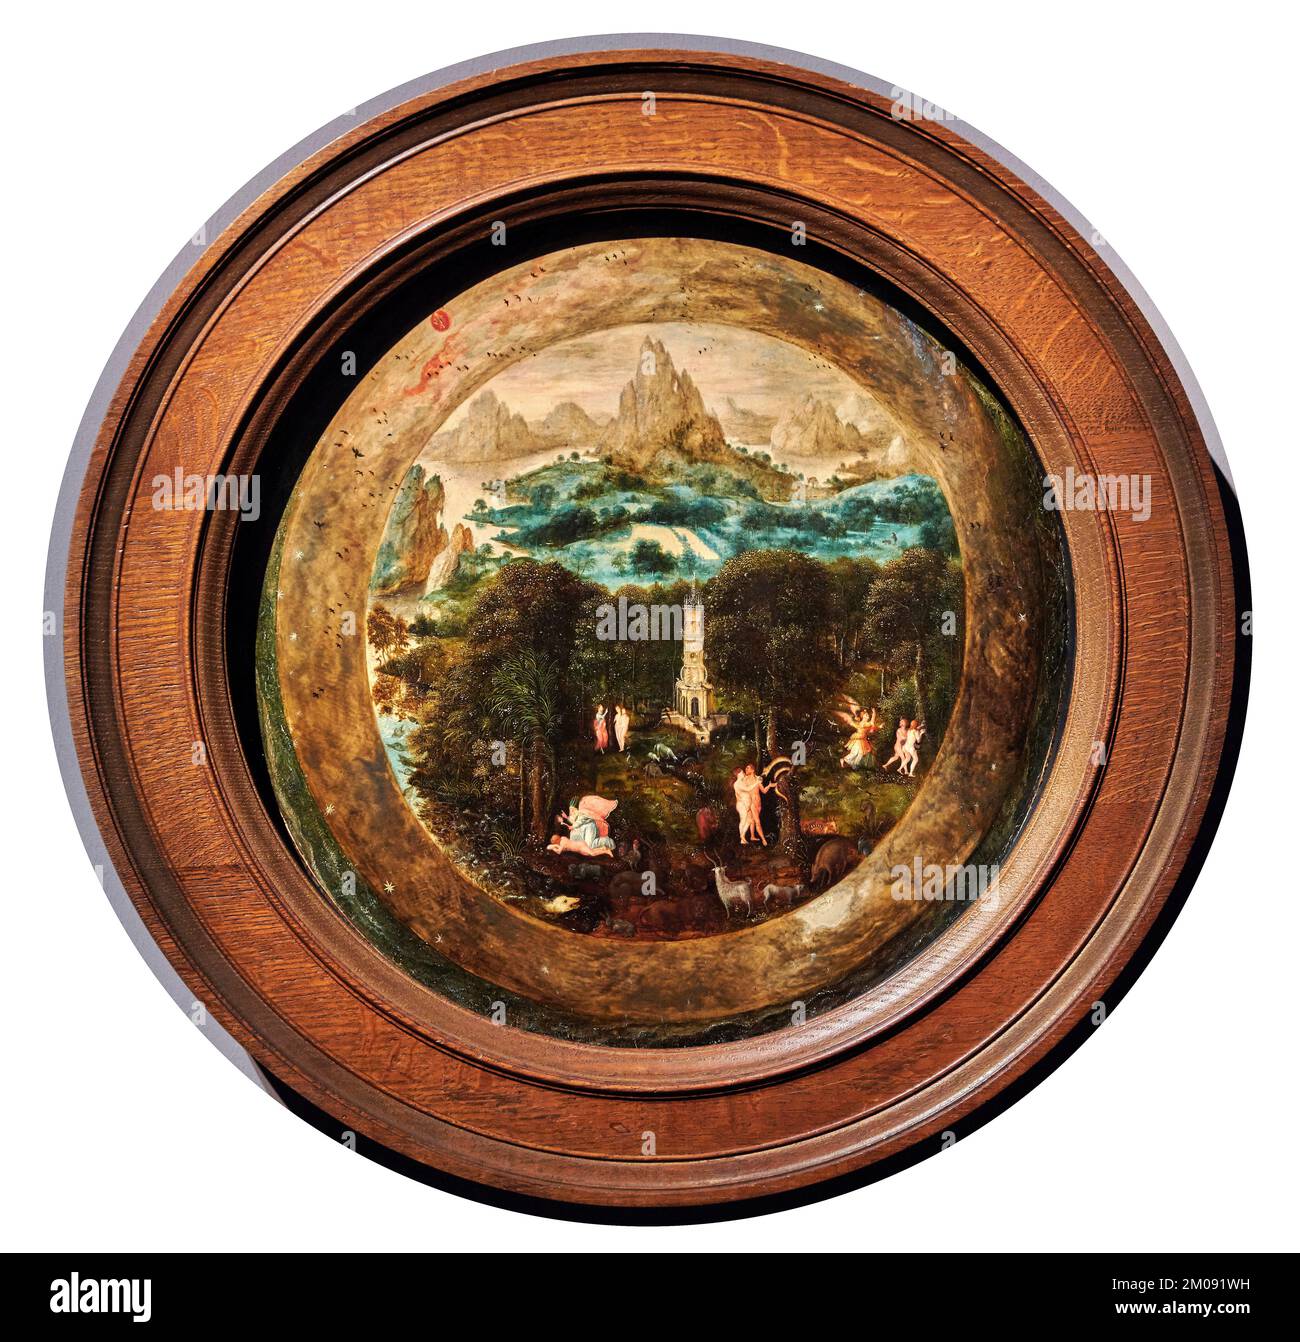 Paradiso terrestre  - olio su tavola  - Herri met de Bles detto il Civetta - 1550   - Amsterdam, Rijksmuseum Stock Photo